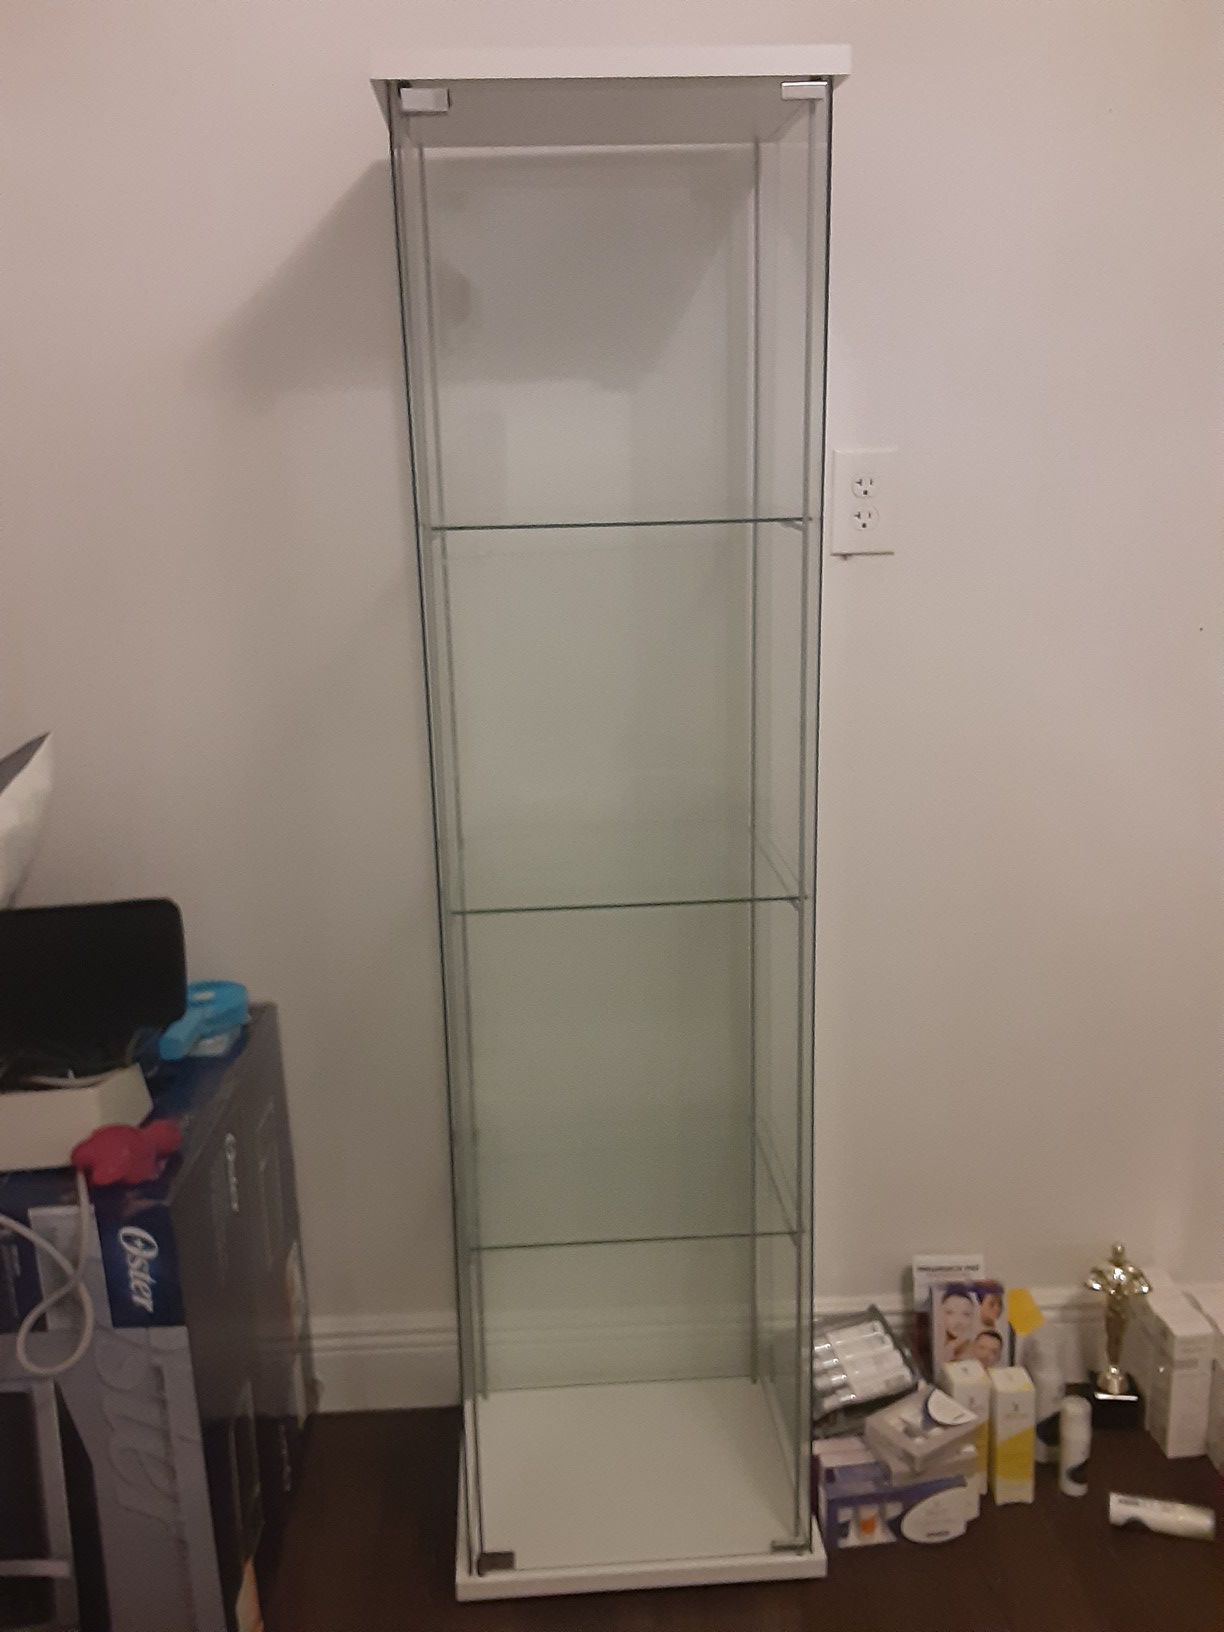 SPA room IKEA glass cabinet for sale.